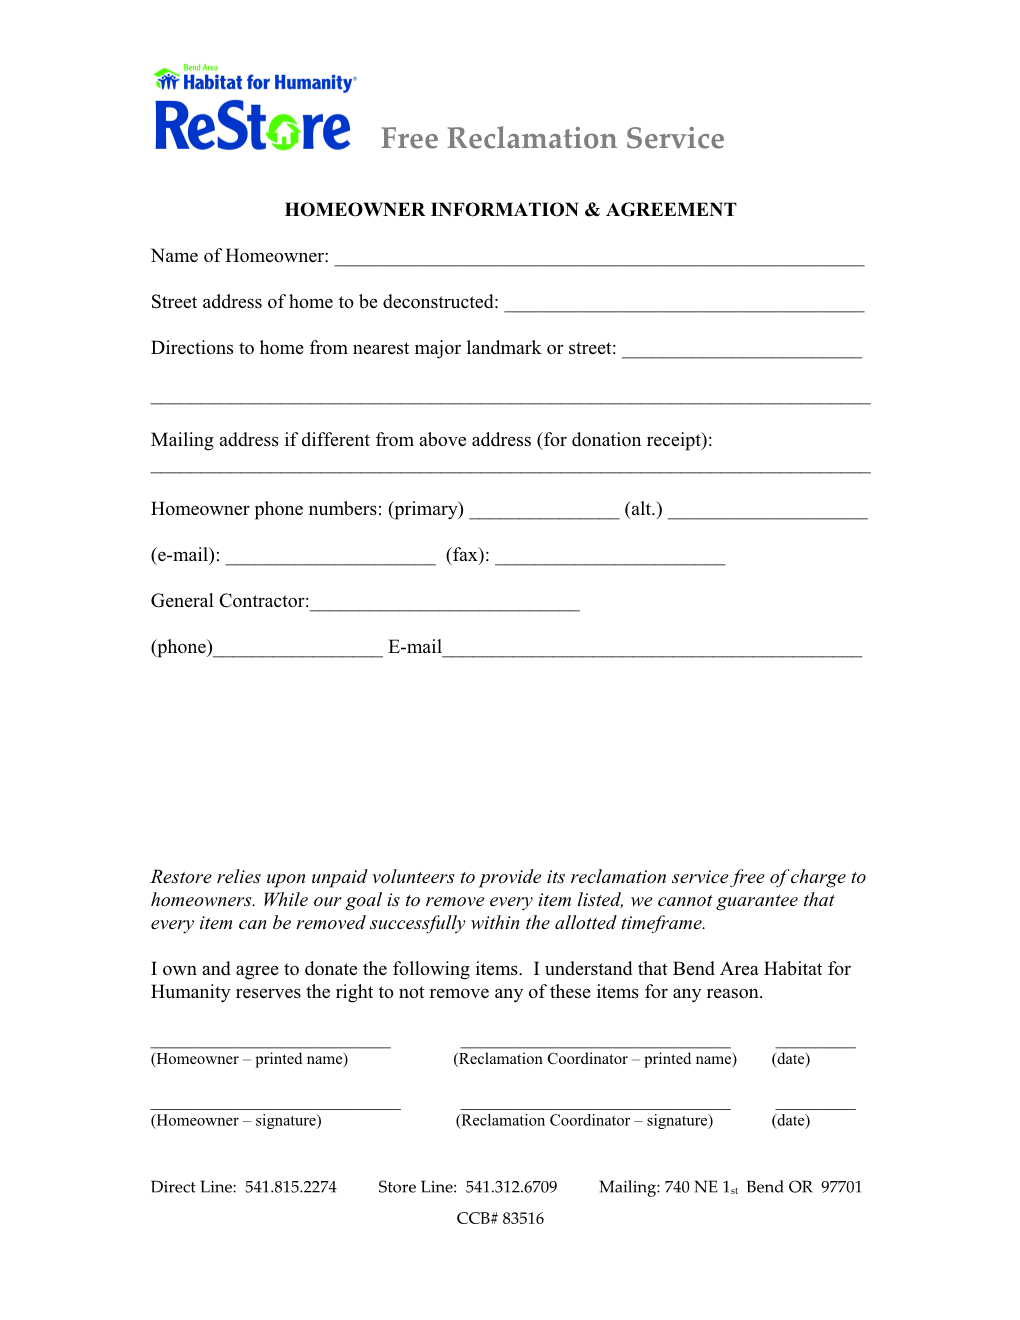 Homeowner Information & Agreement